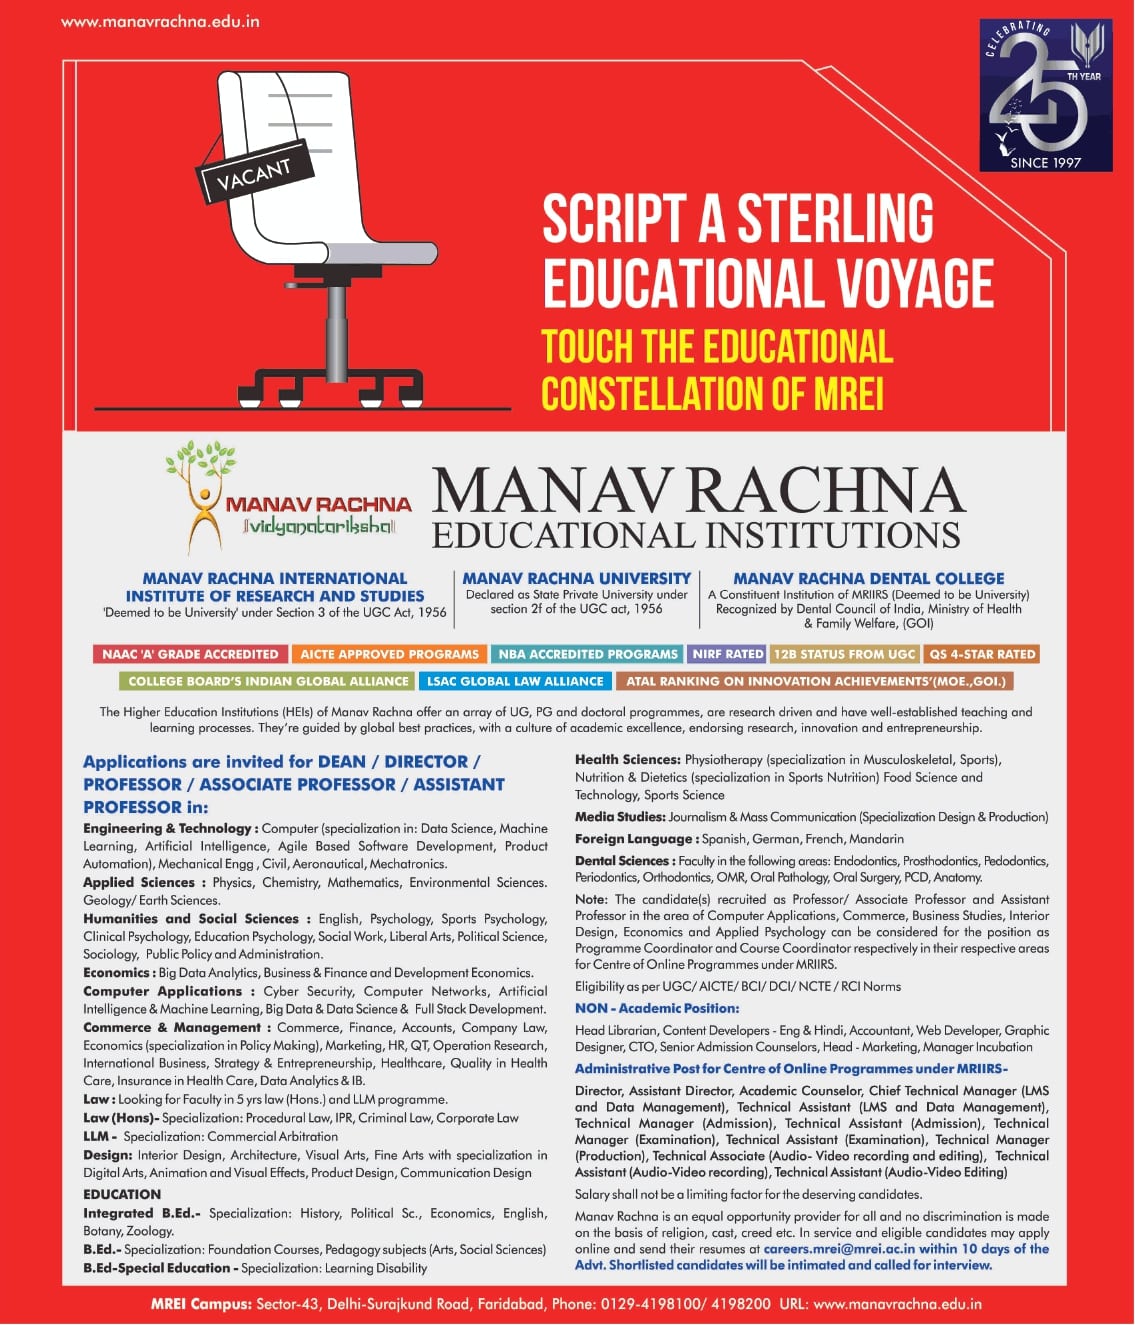 manav-rachna-educational-institutions-recruitment-ad-toi-delhi-30-6-2021